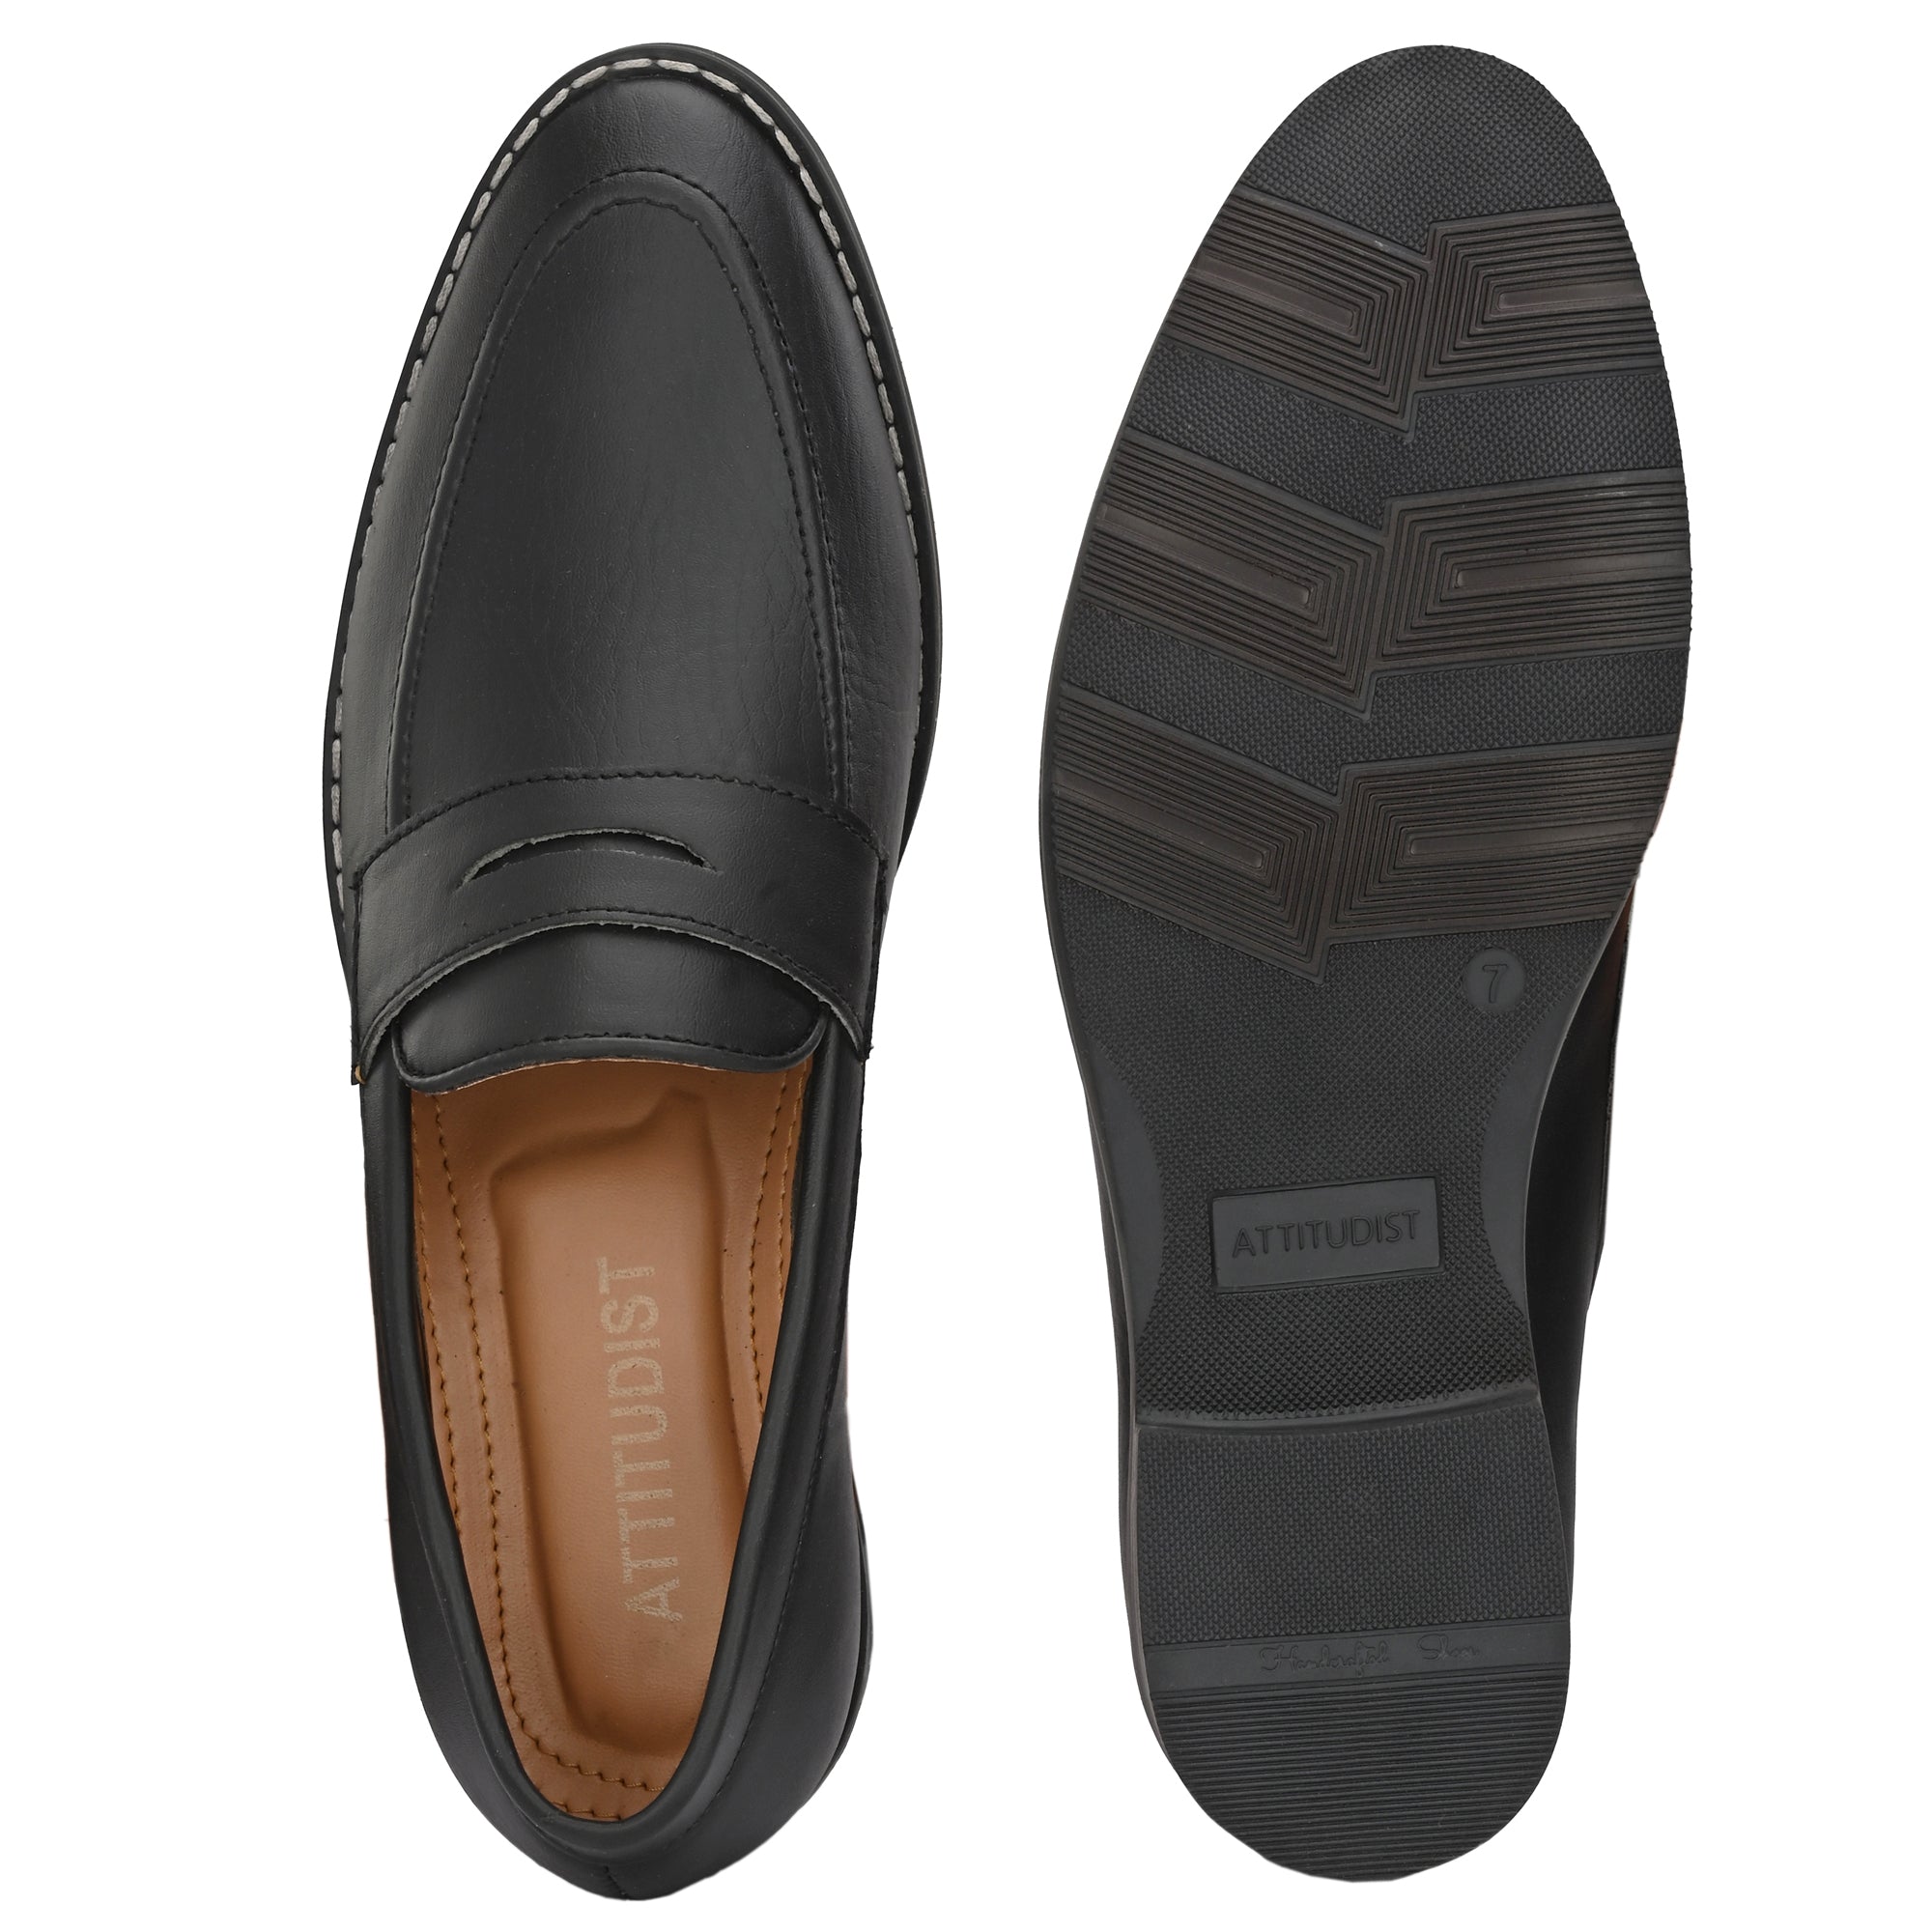 stylish-men-shoes-3752black-1